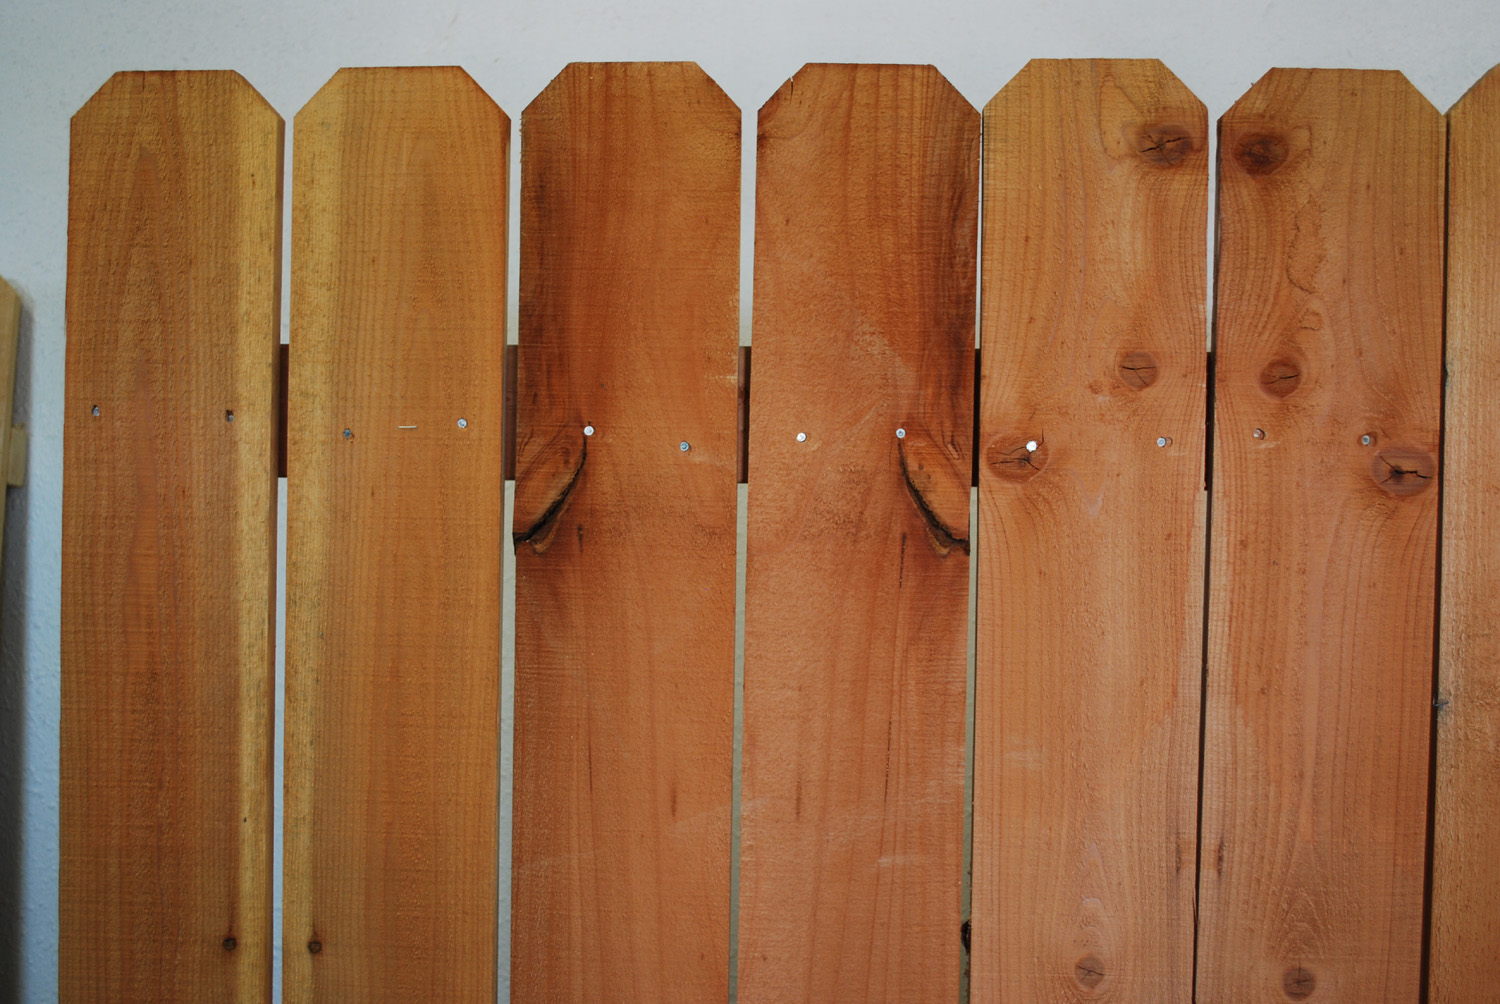 1" x 6" redwood fence panel